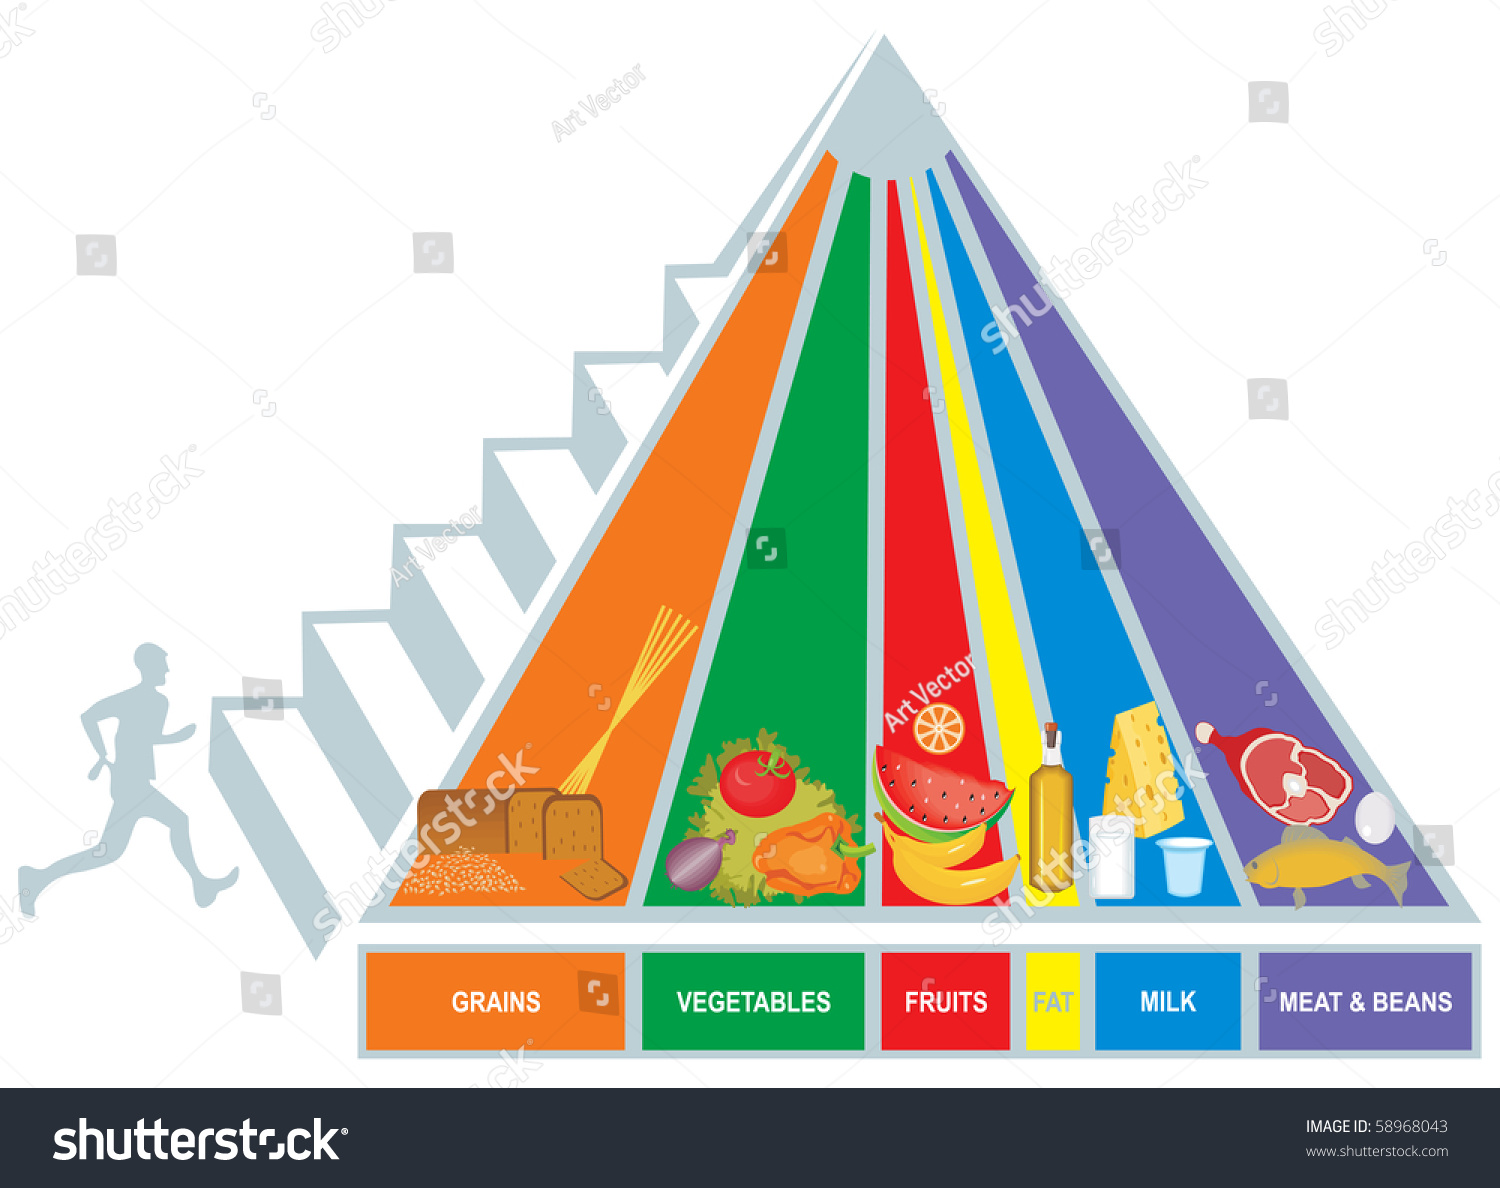 Food Pyramid Vector Stock Vector Royalty Free 58968043 8690